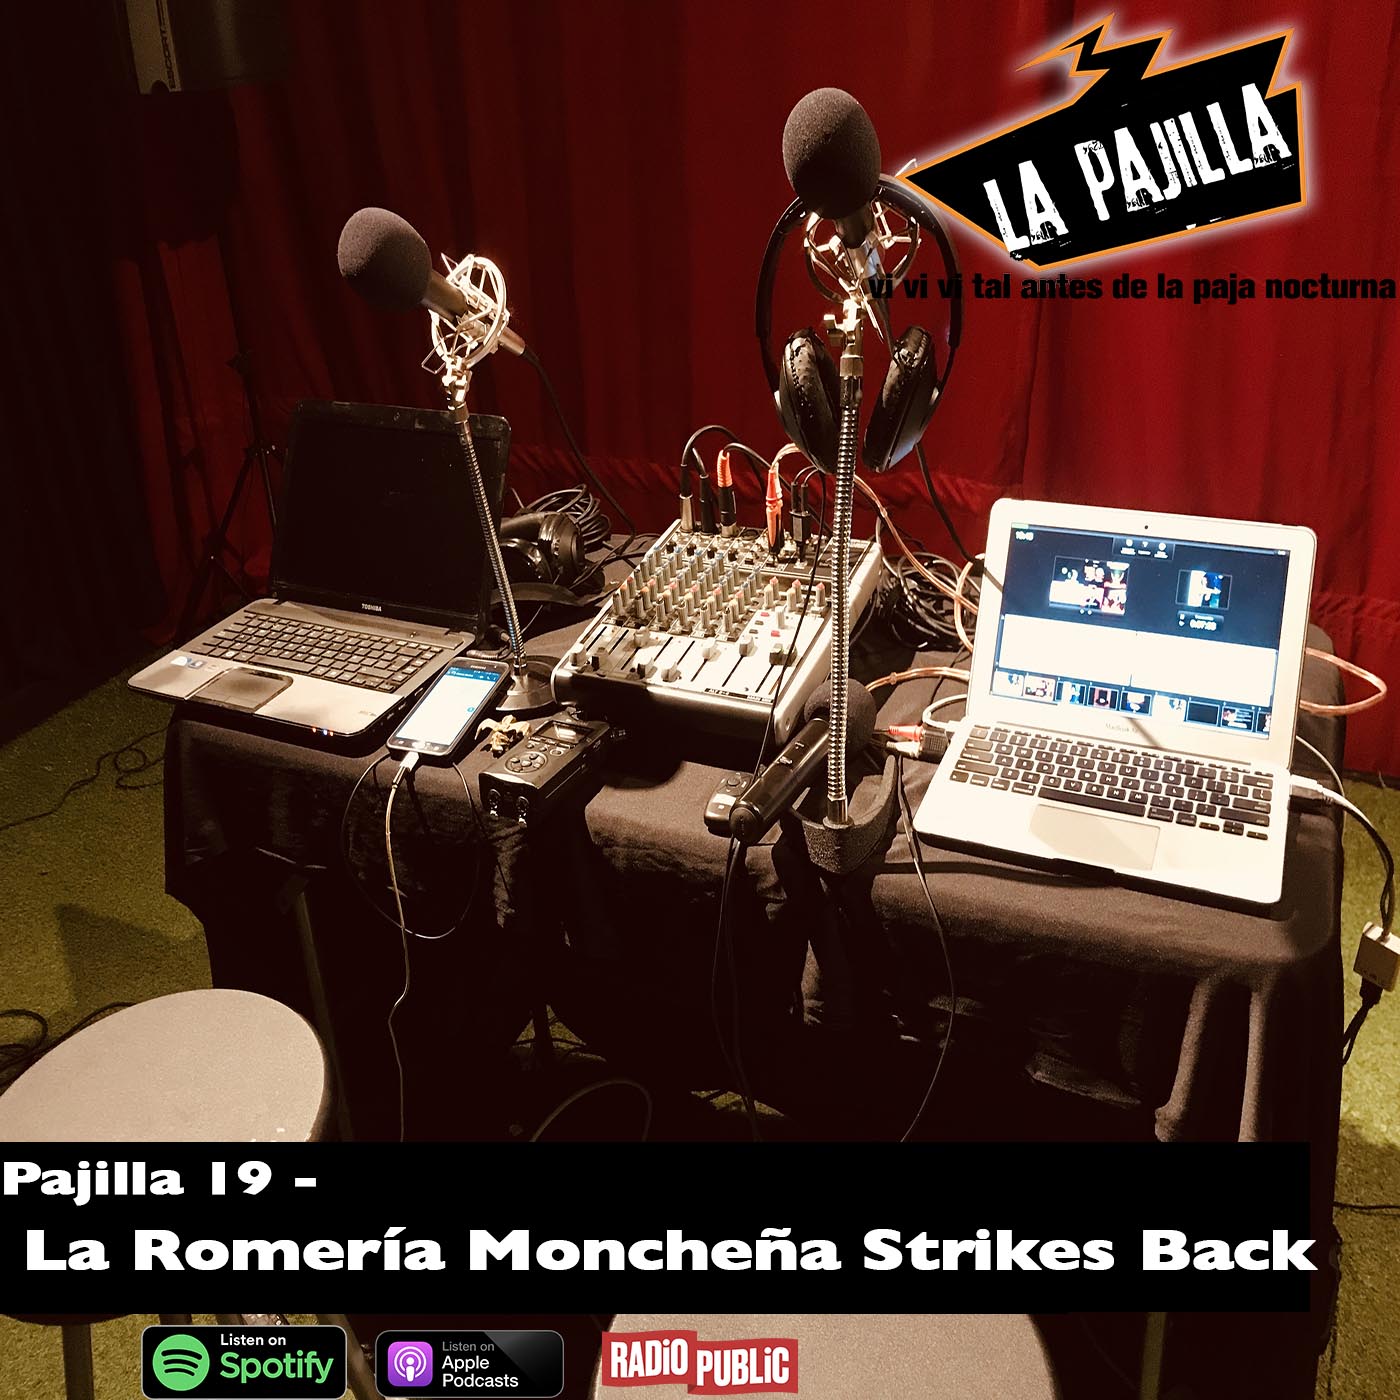 La Paja Nocturna Podcast CR